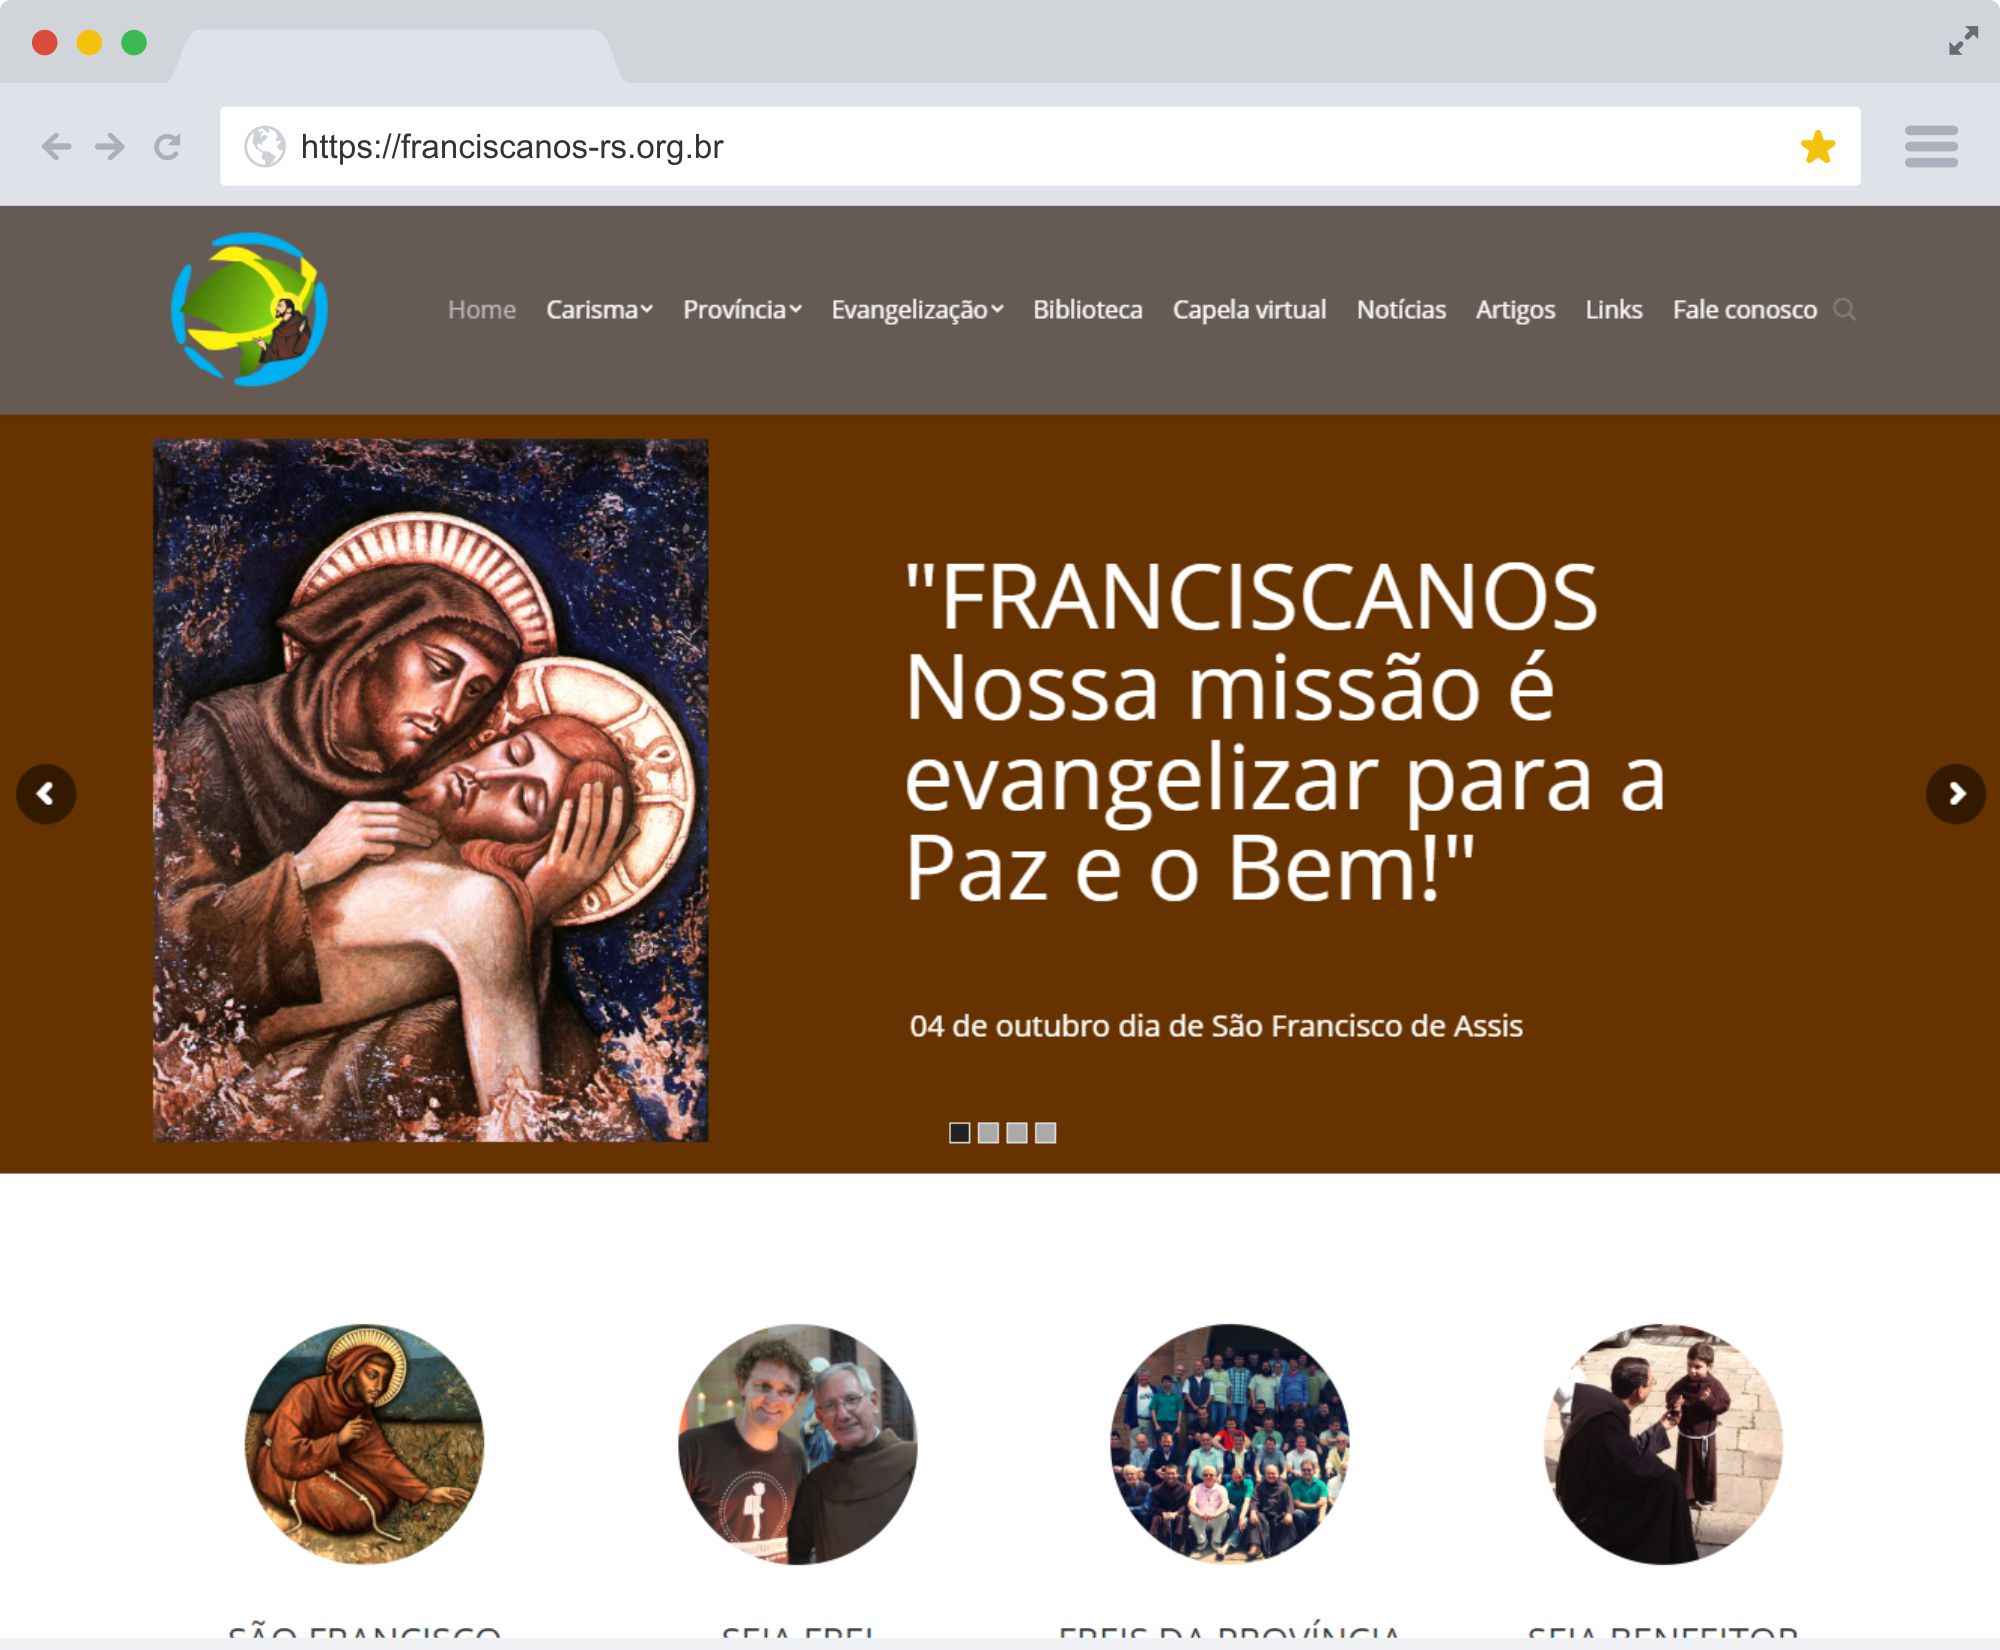 franciscanos-rs.org.br